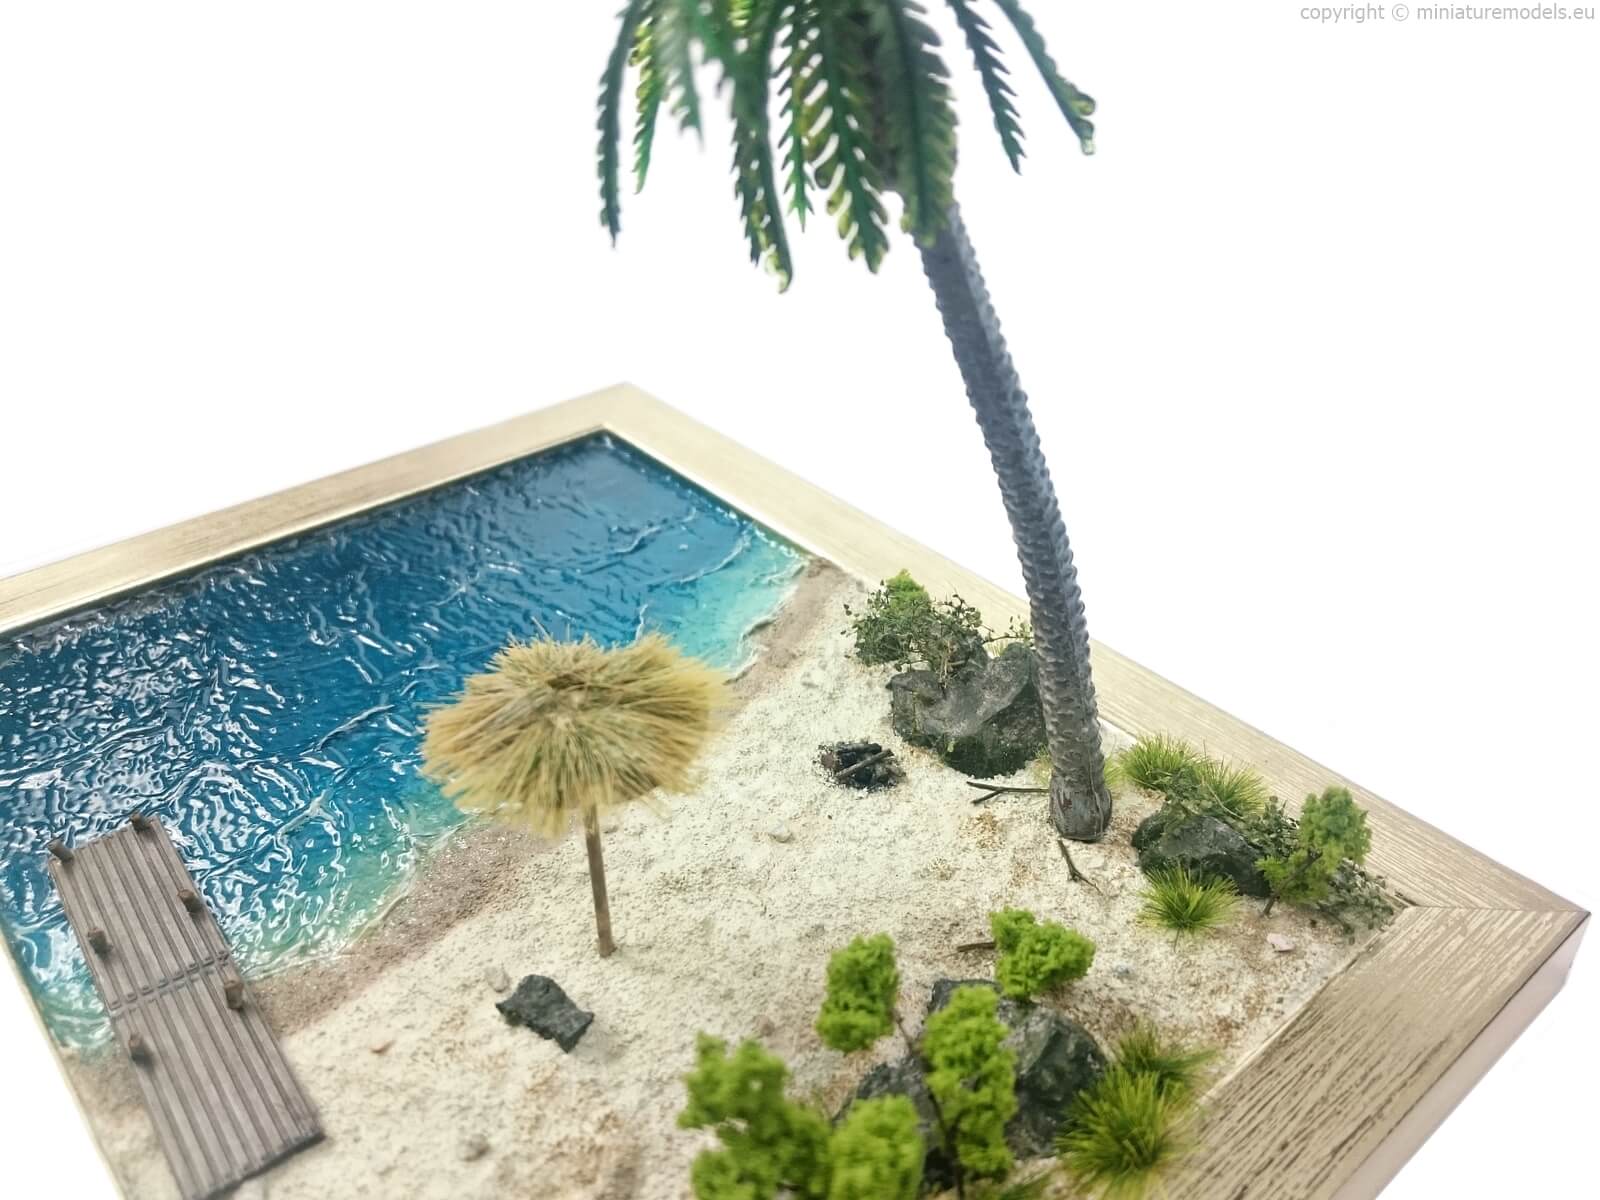 Miniature model of caribbean scenery